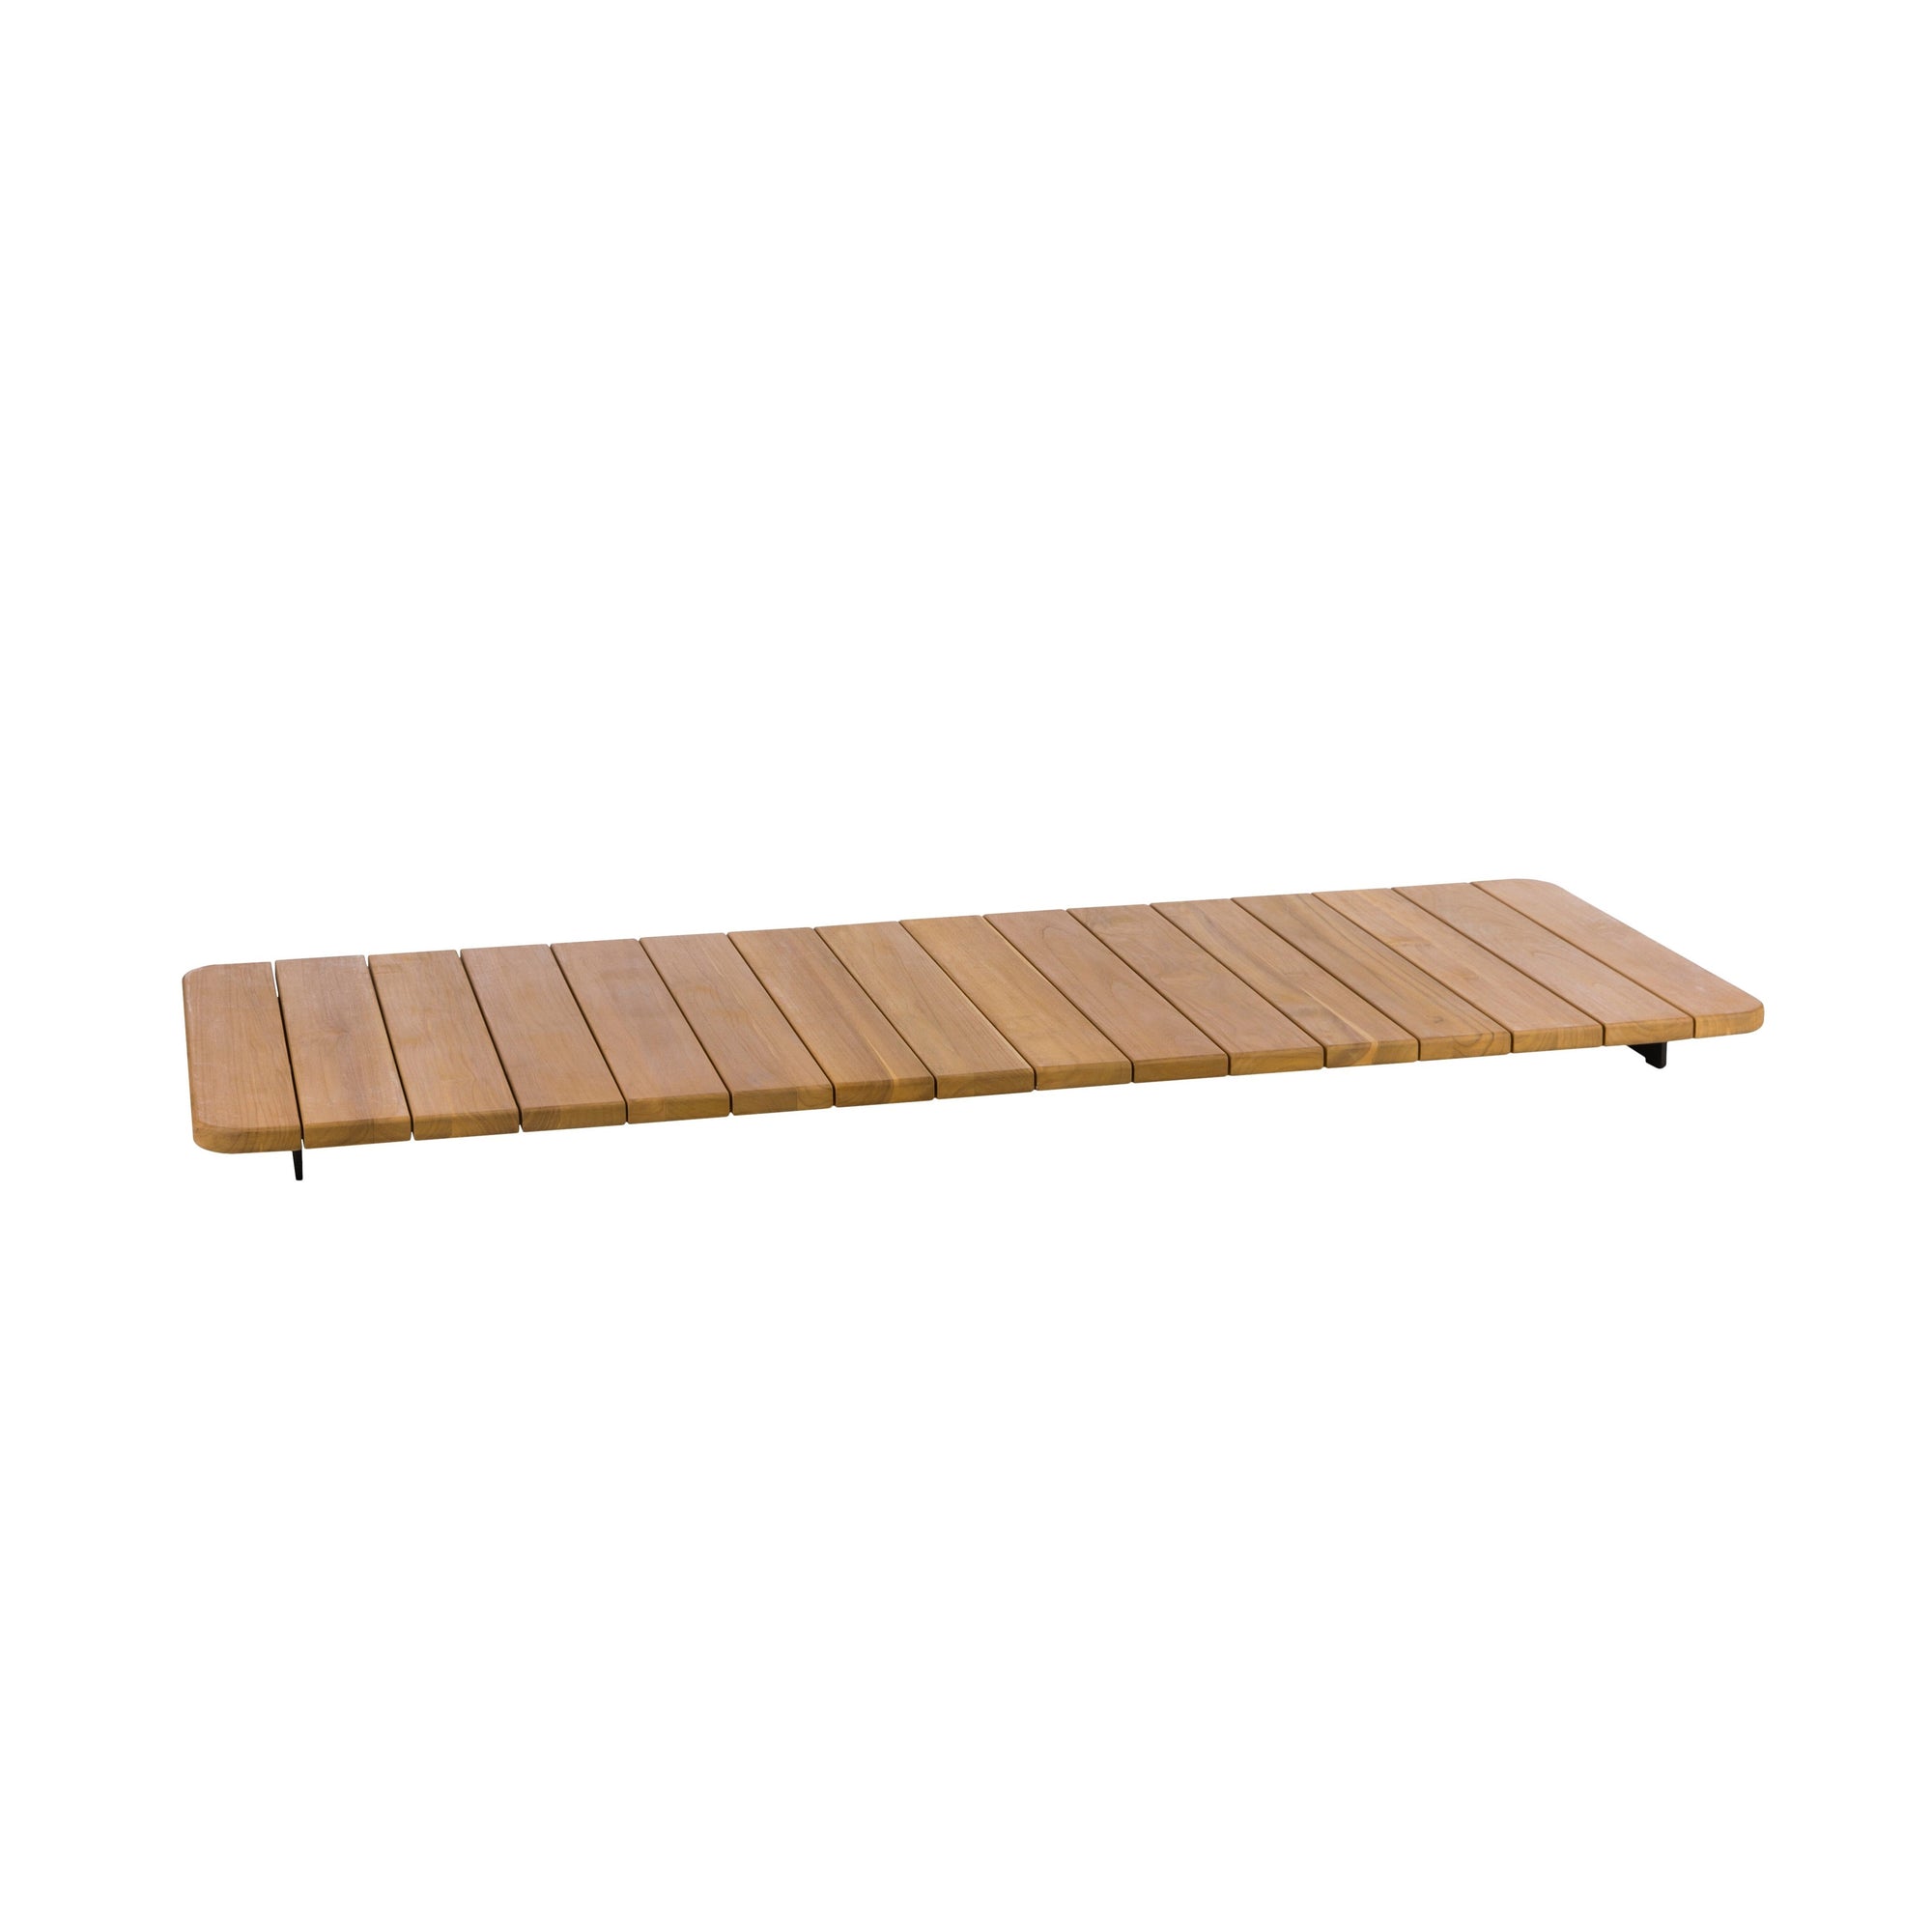 Point Pal lounge table rectangular 246 cm